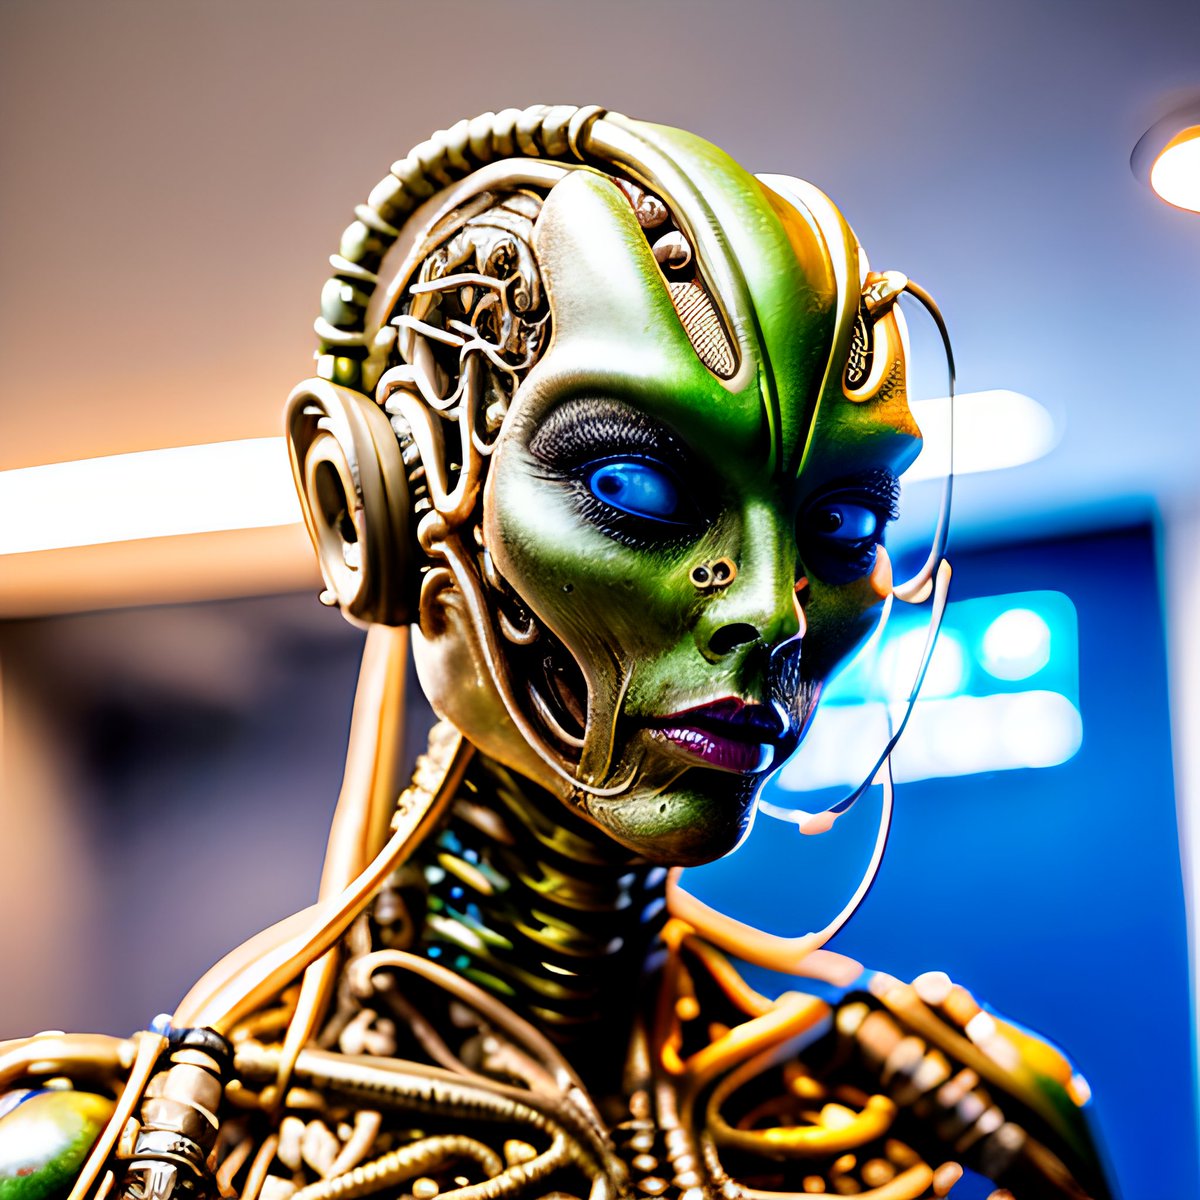 Yea! My Alien Cyborgs are coming better now less cartoony

#Aliens #alien #ufotwitter #UFOs #ufotwitterweek #UFOdisclosureNOW #AIart #aigenerated #aigeneratedart #nmkd